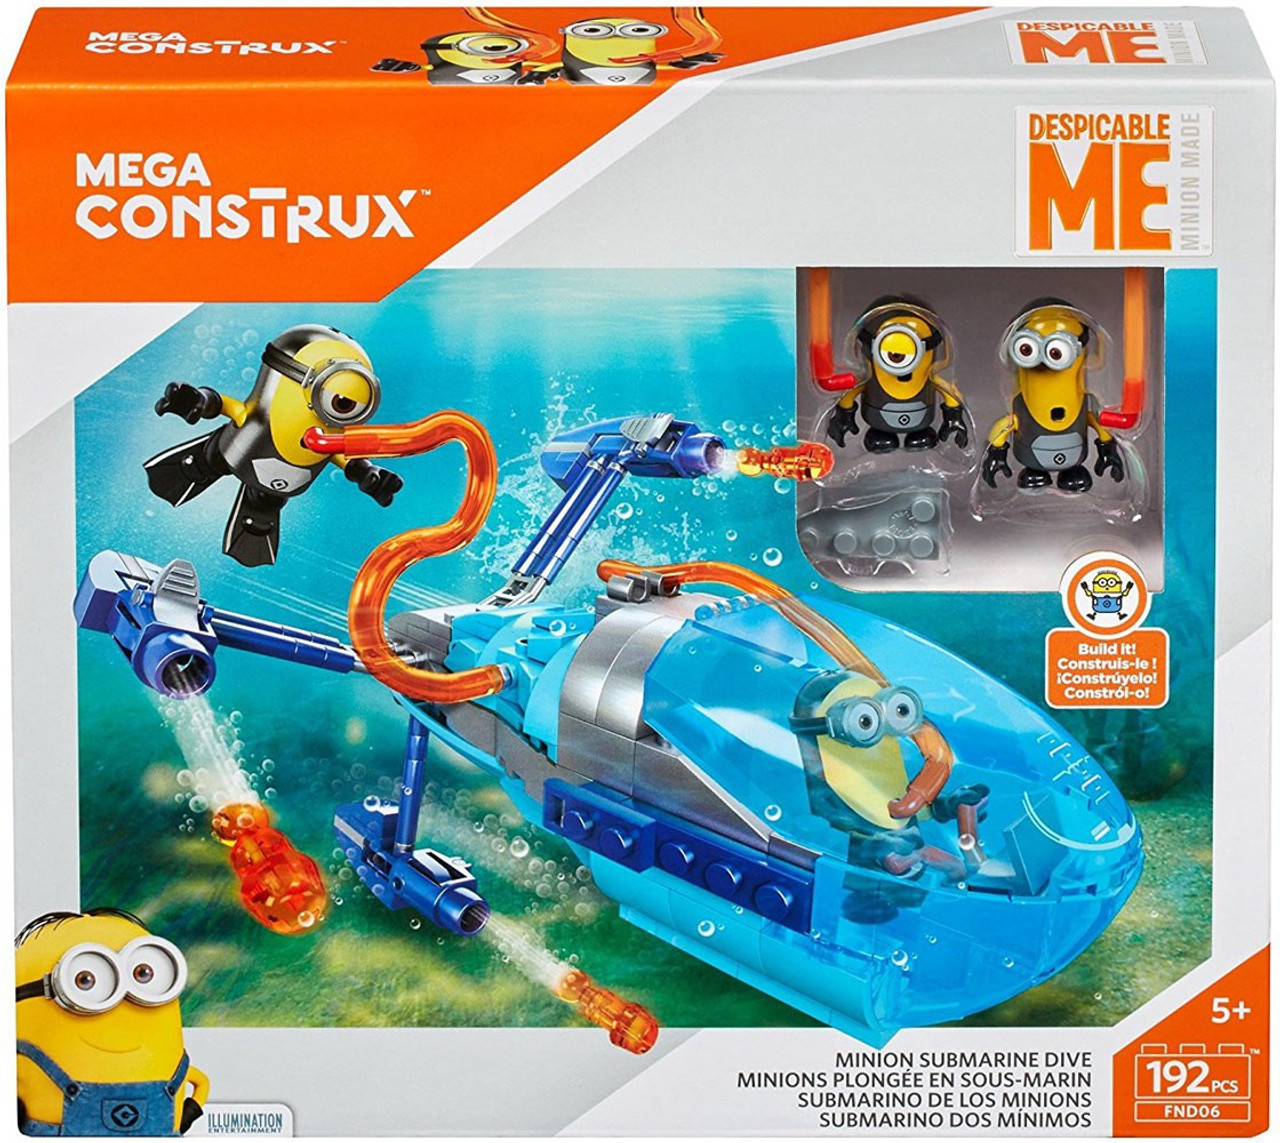 Despicable Me Minions Minion Submarine Dive Set Mega Construx Toywiz - cart ride into minions roblox